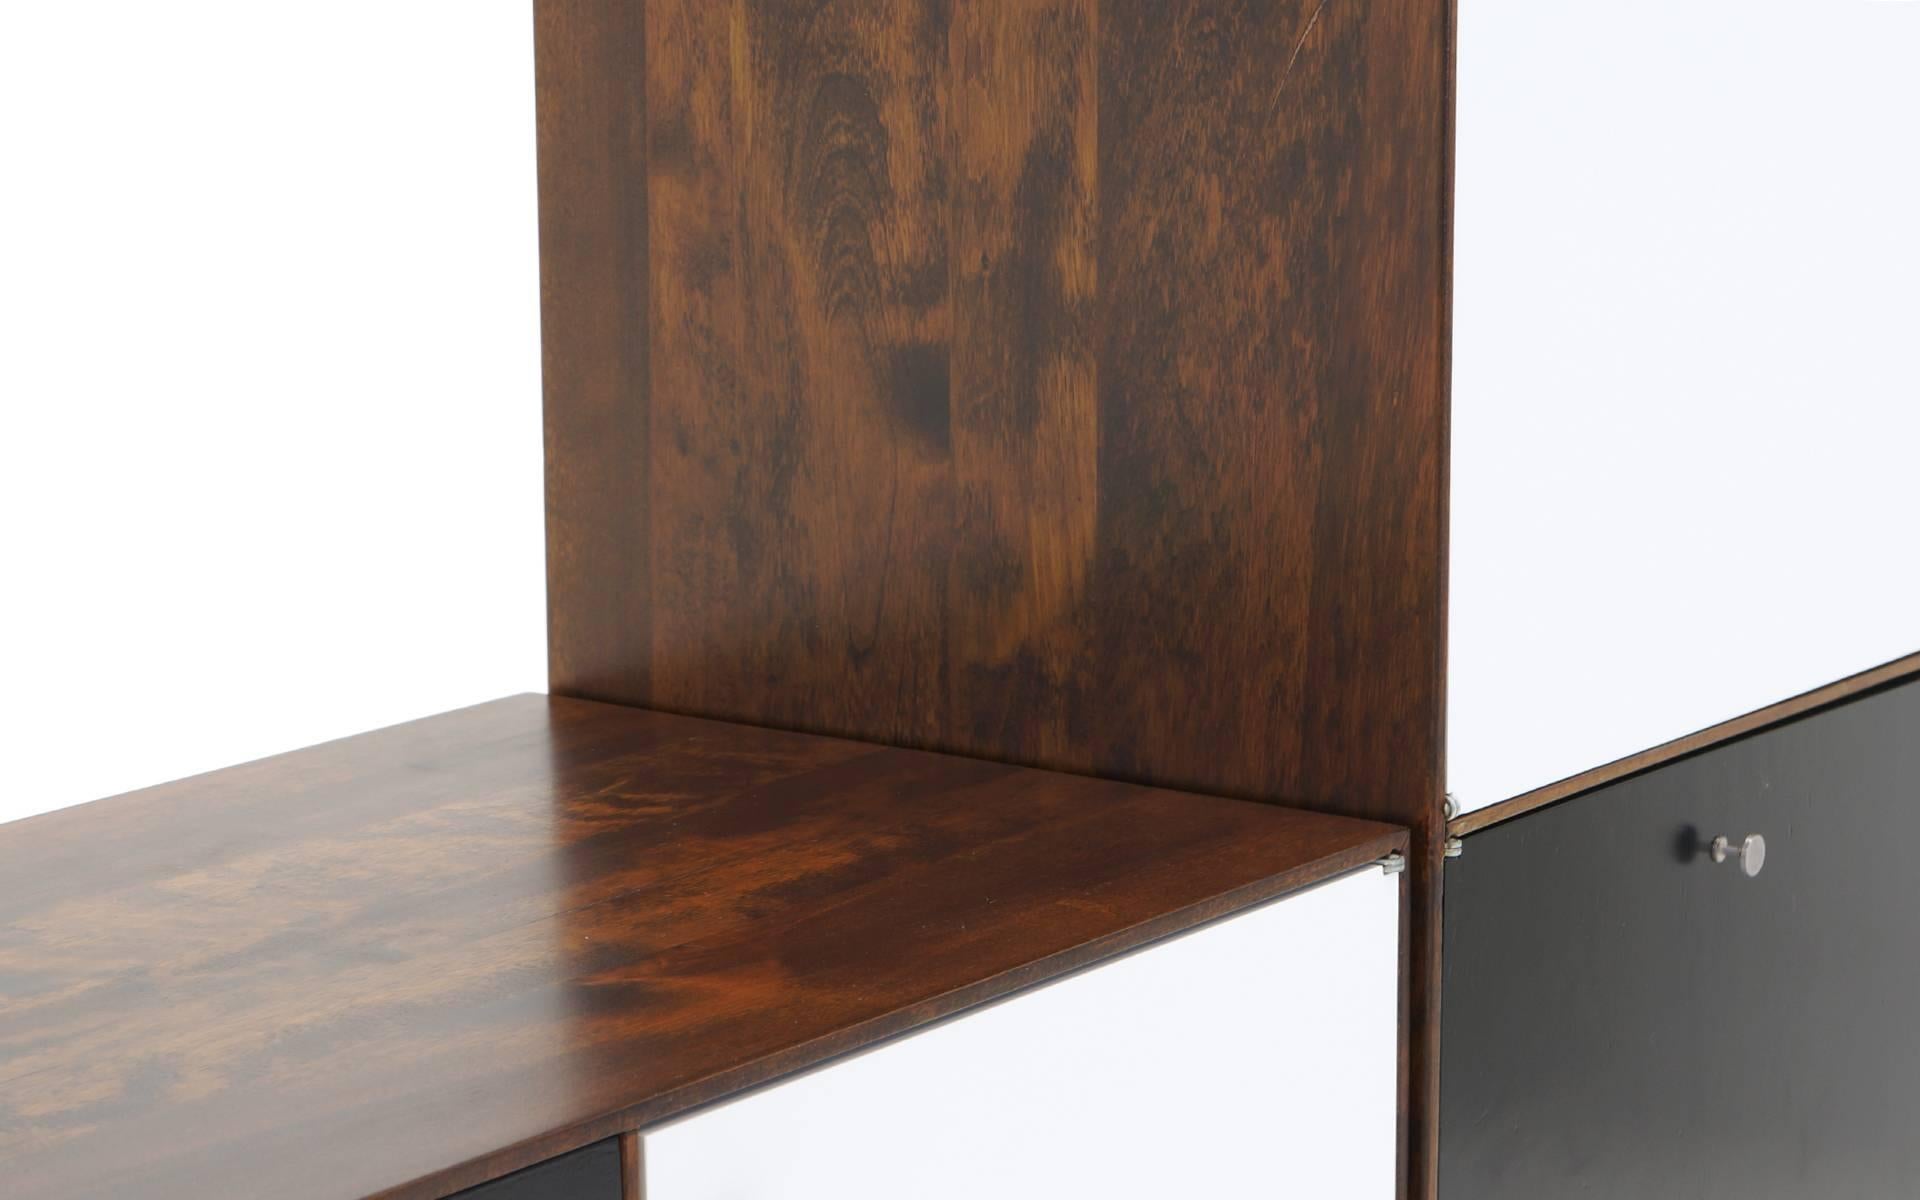 Wood Robin Day Modular Storage Cabinets / Credenza, Walnut, Black and White.Five Units.